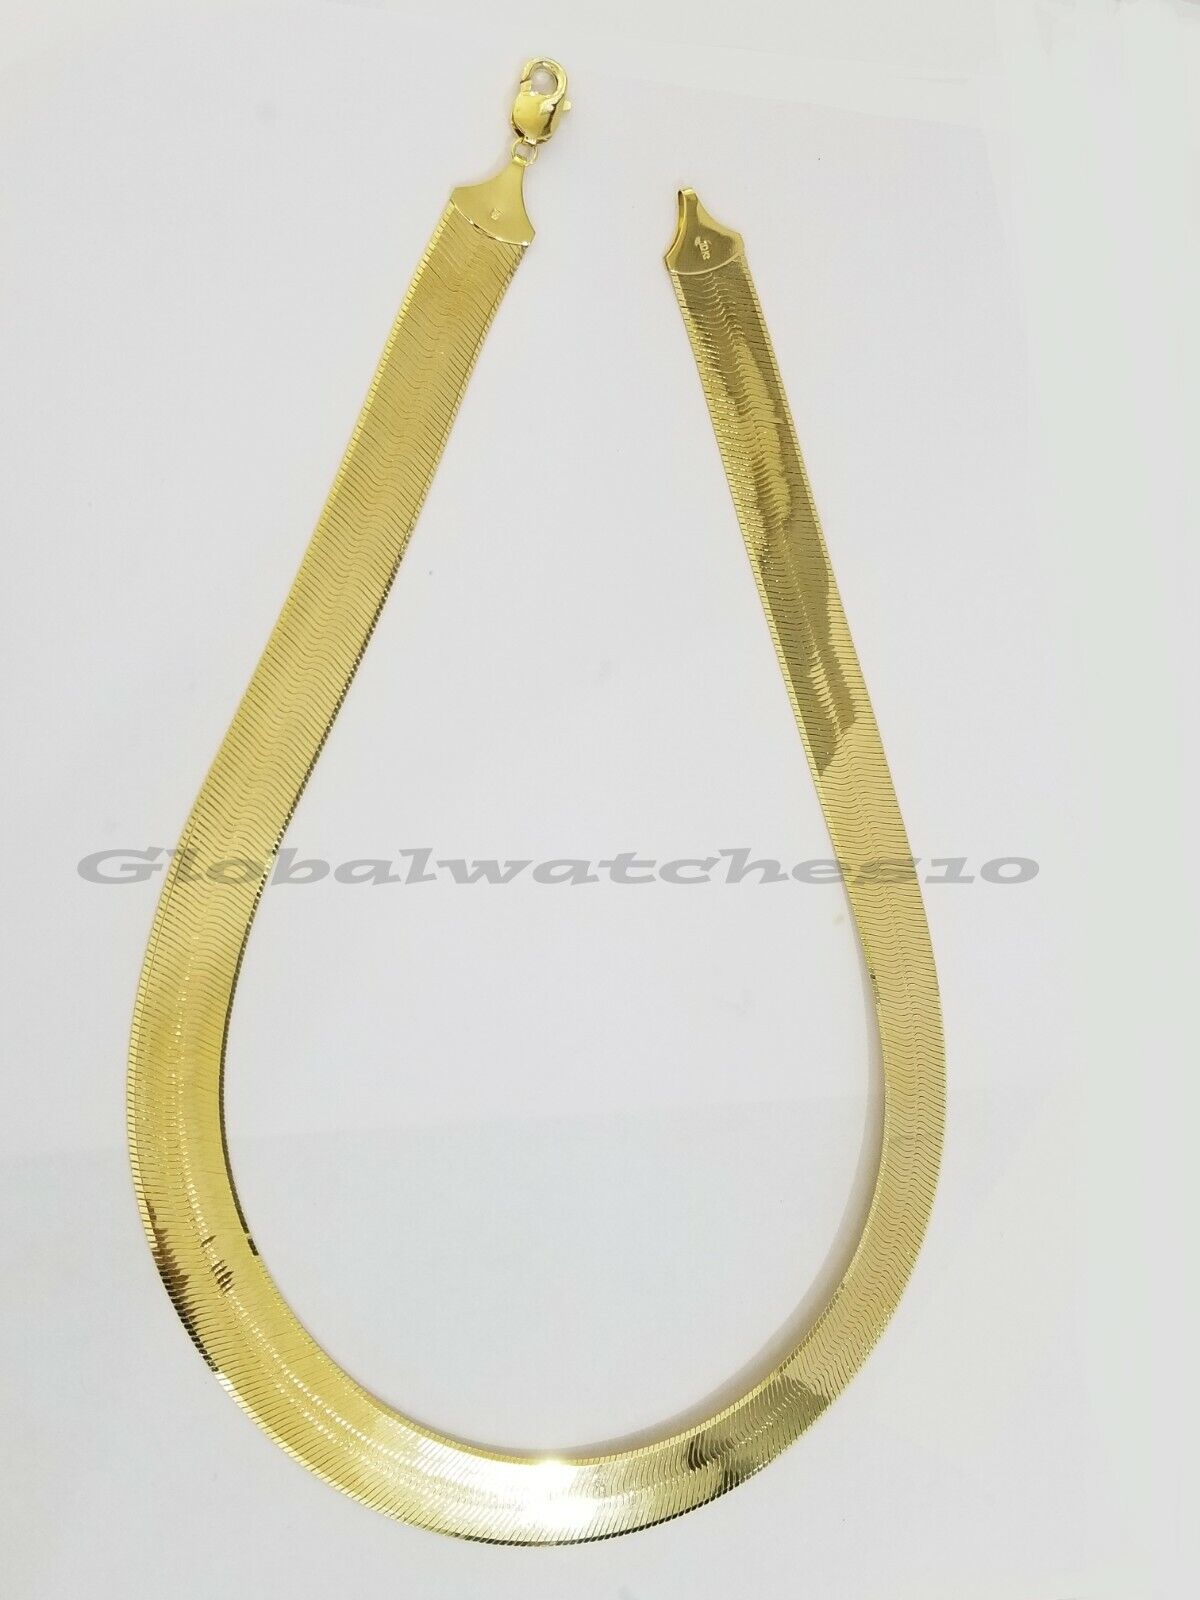 15mm 10k Yellow Gold Herring Bone Chain Necklace Lobster lock Men Women REAL 24"